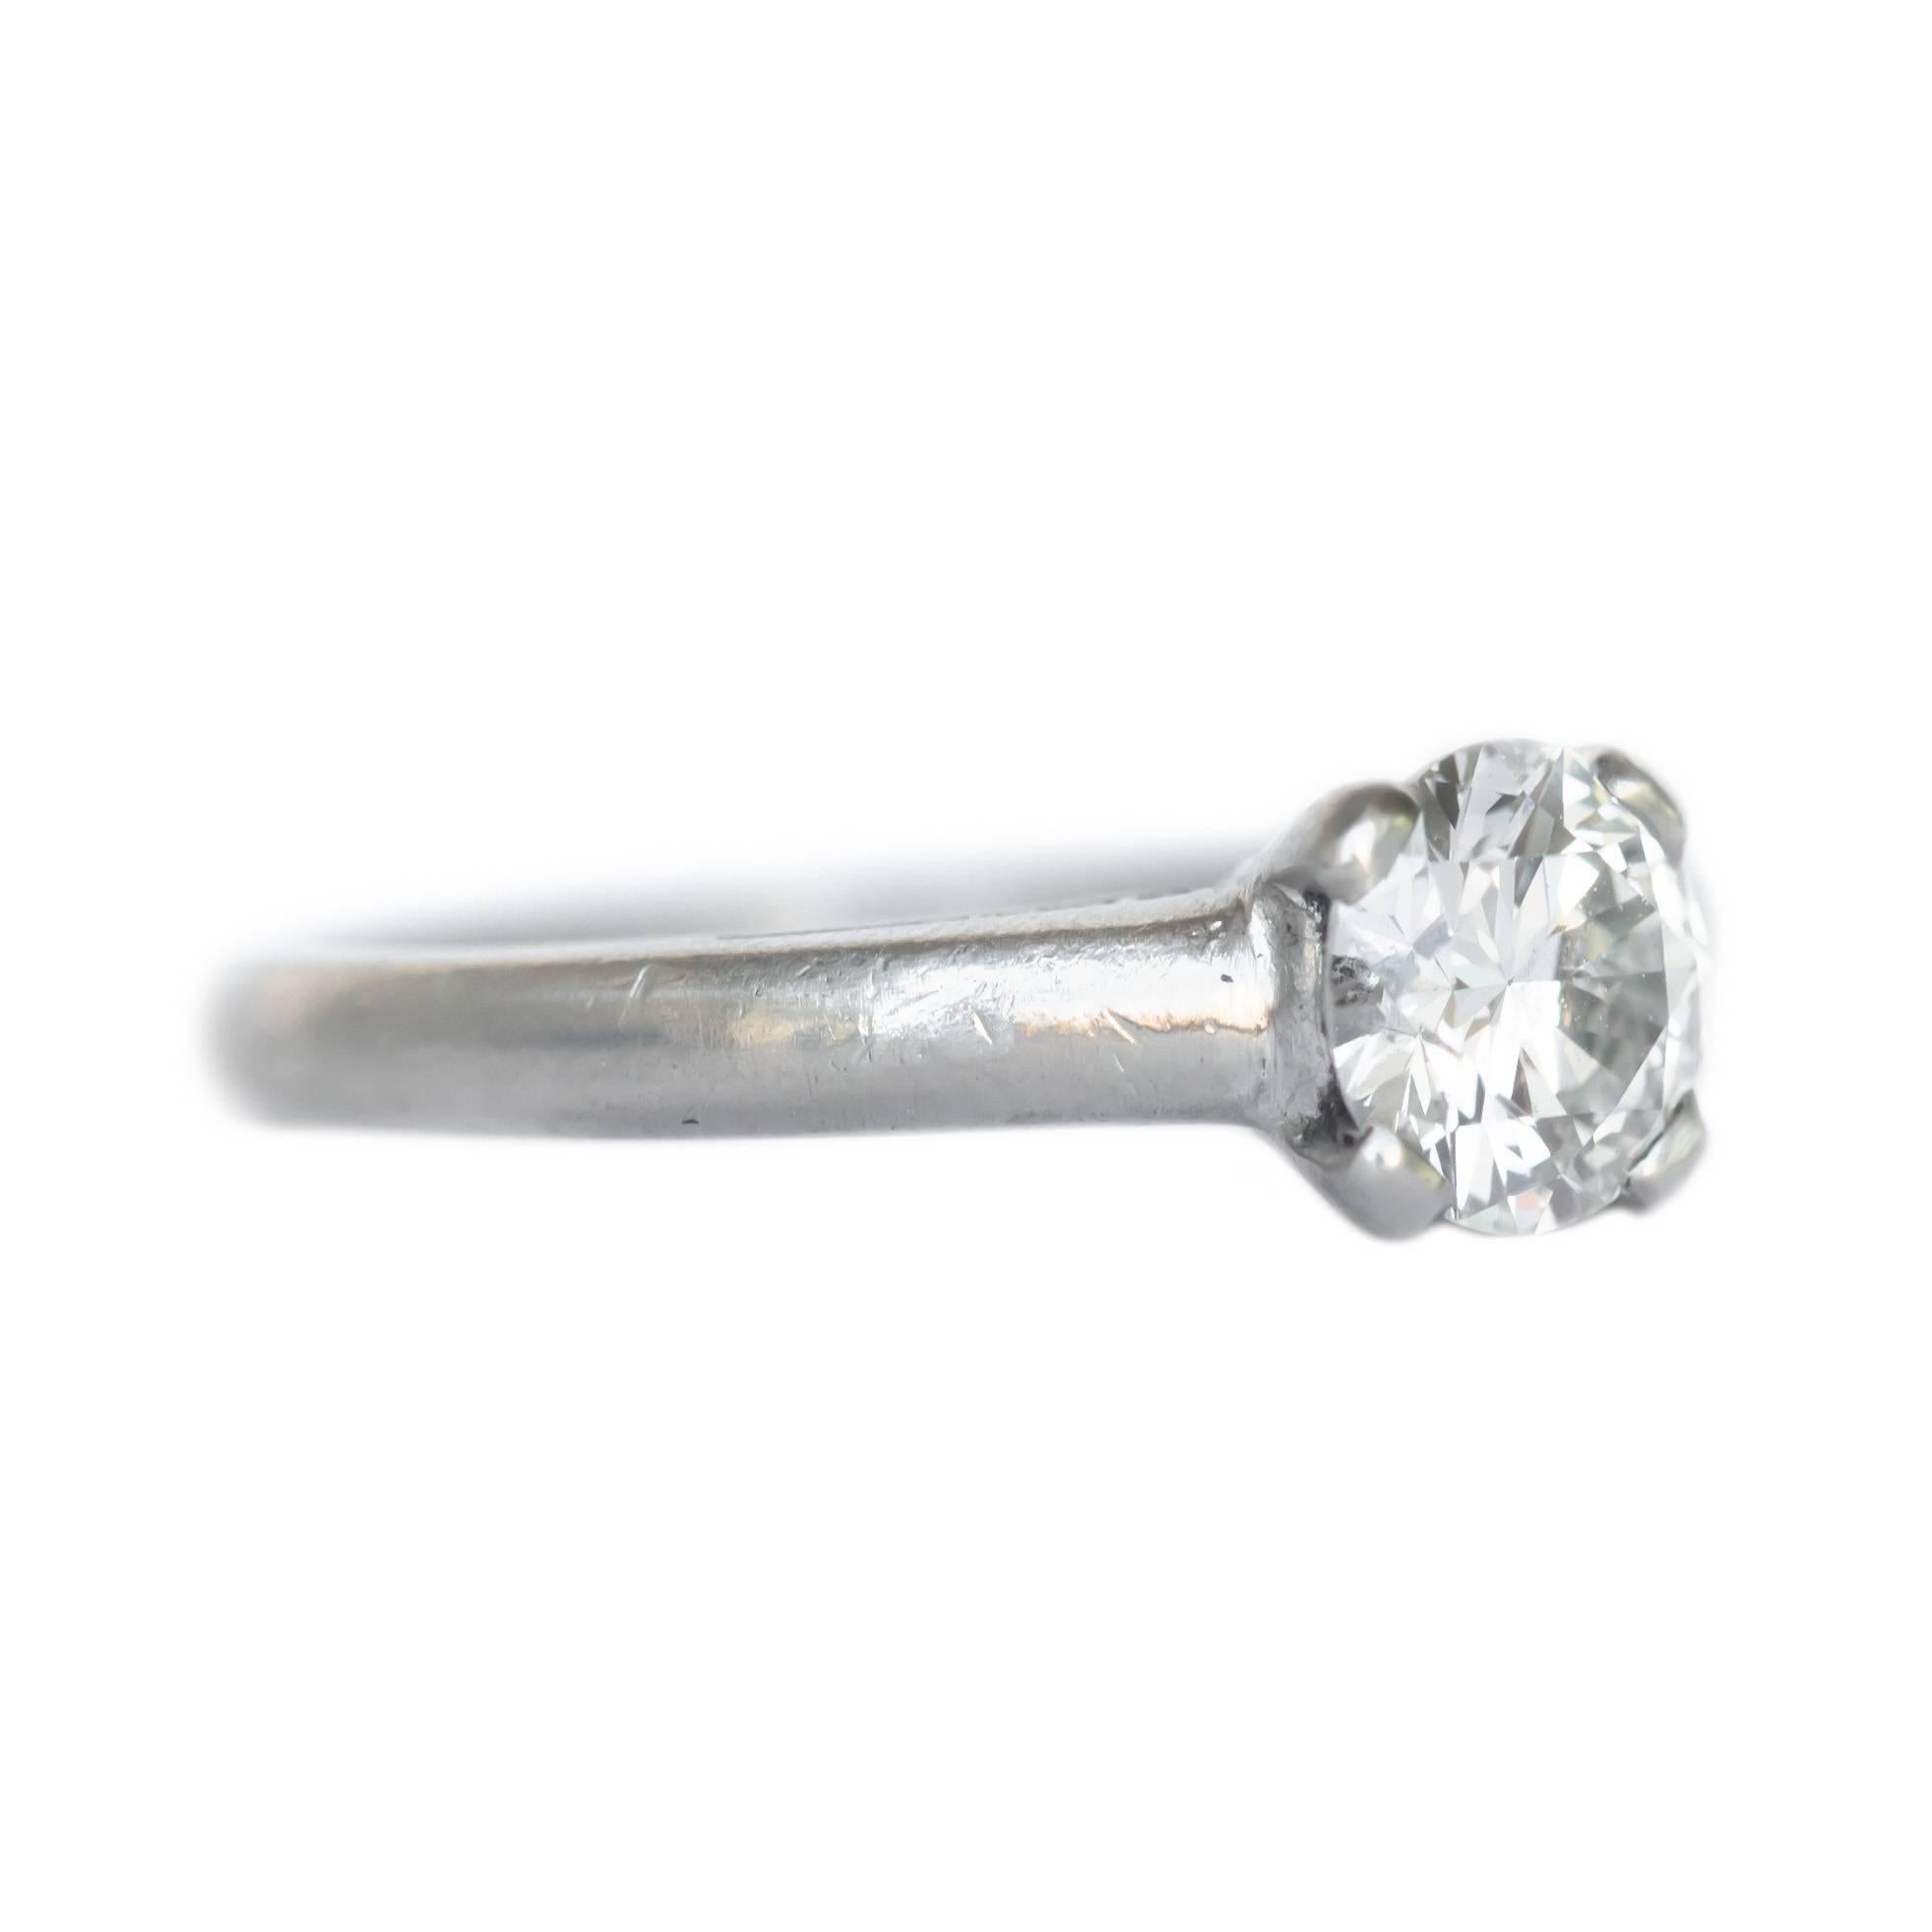 73 carat diamond ring